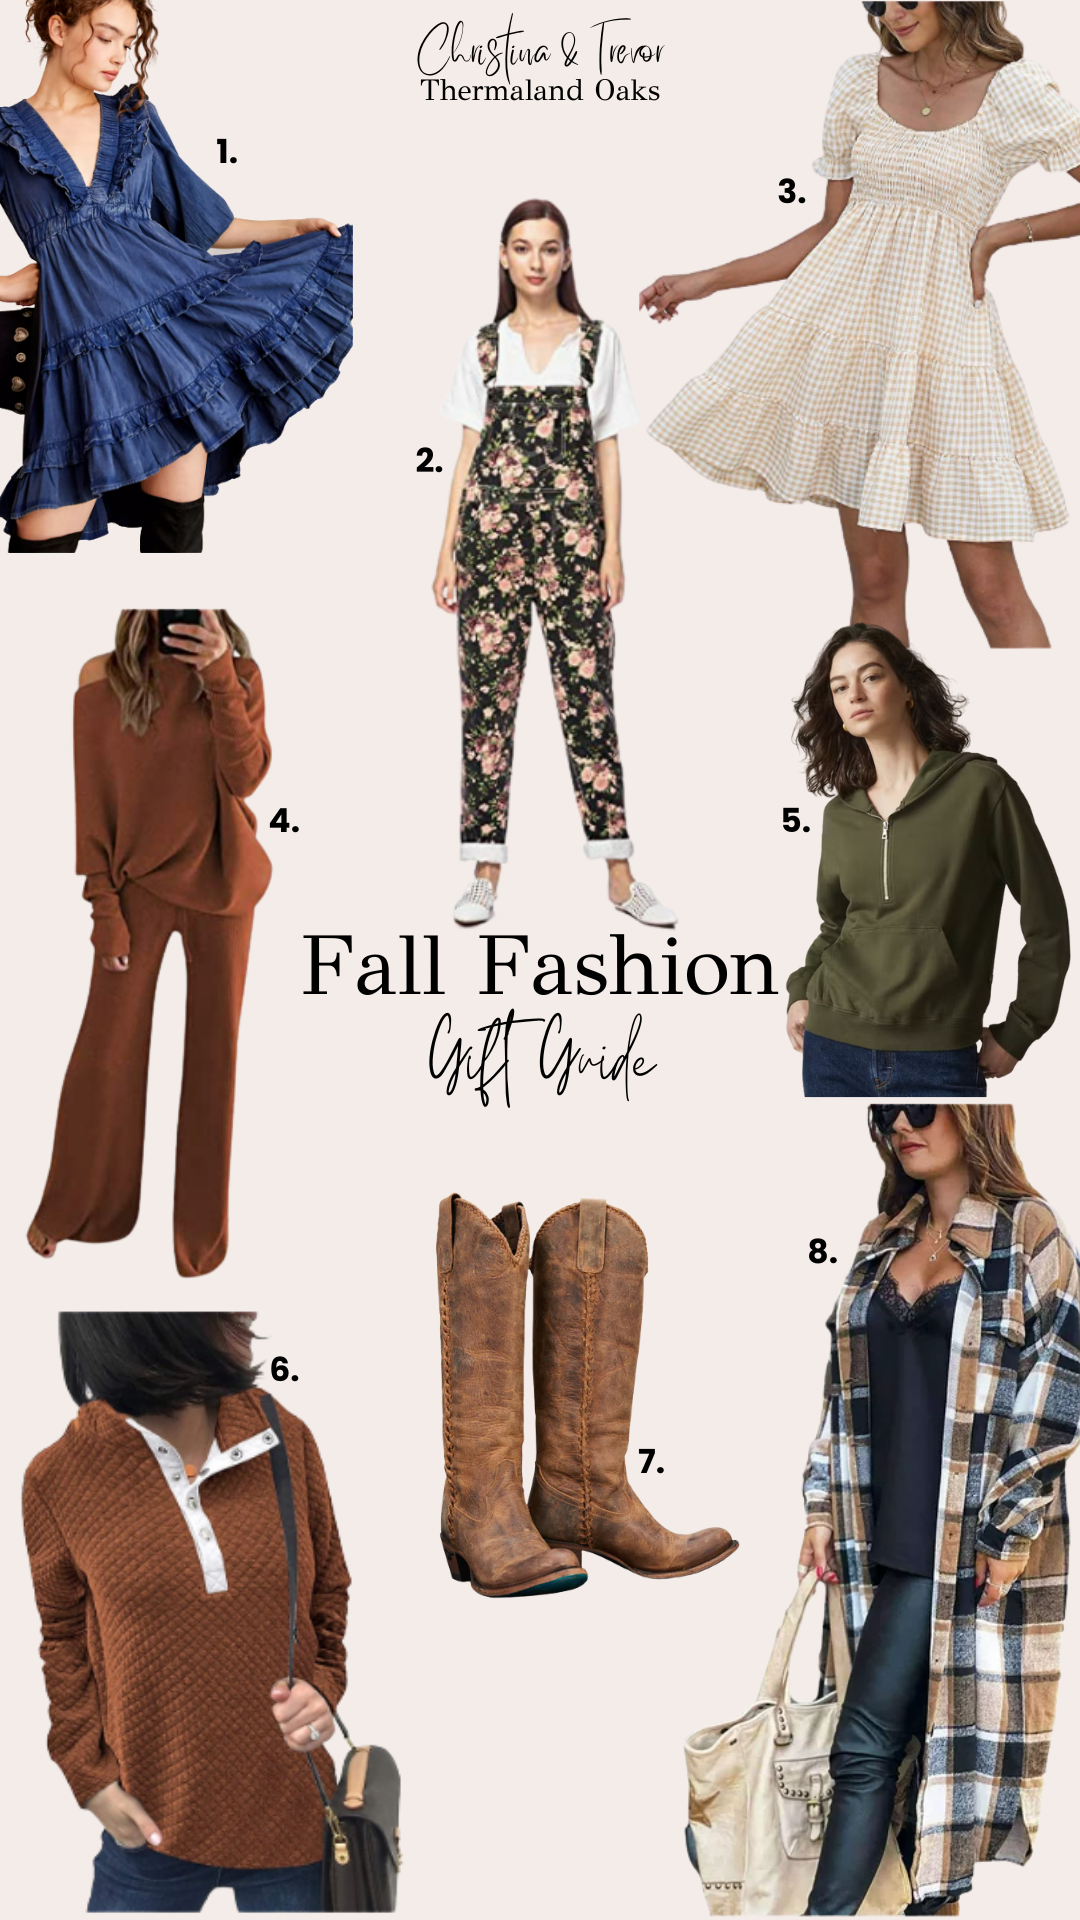 Fall Fashion Gift Guide | Thermaland Oaks